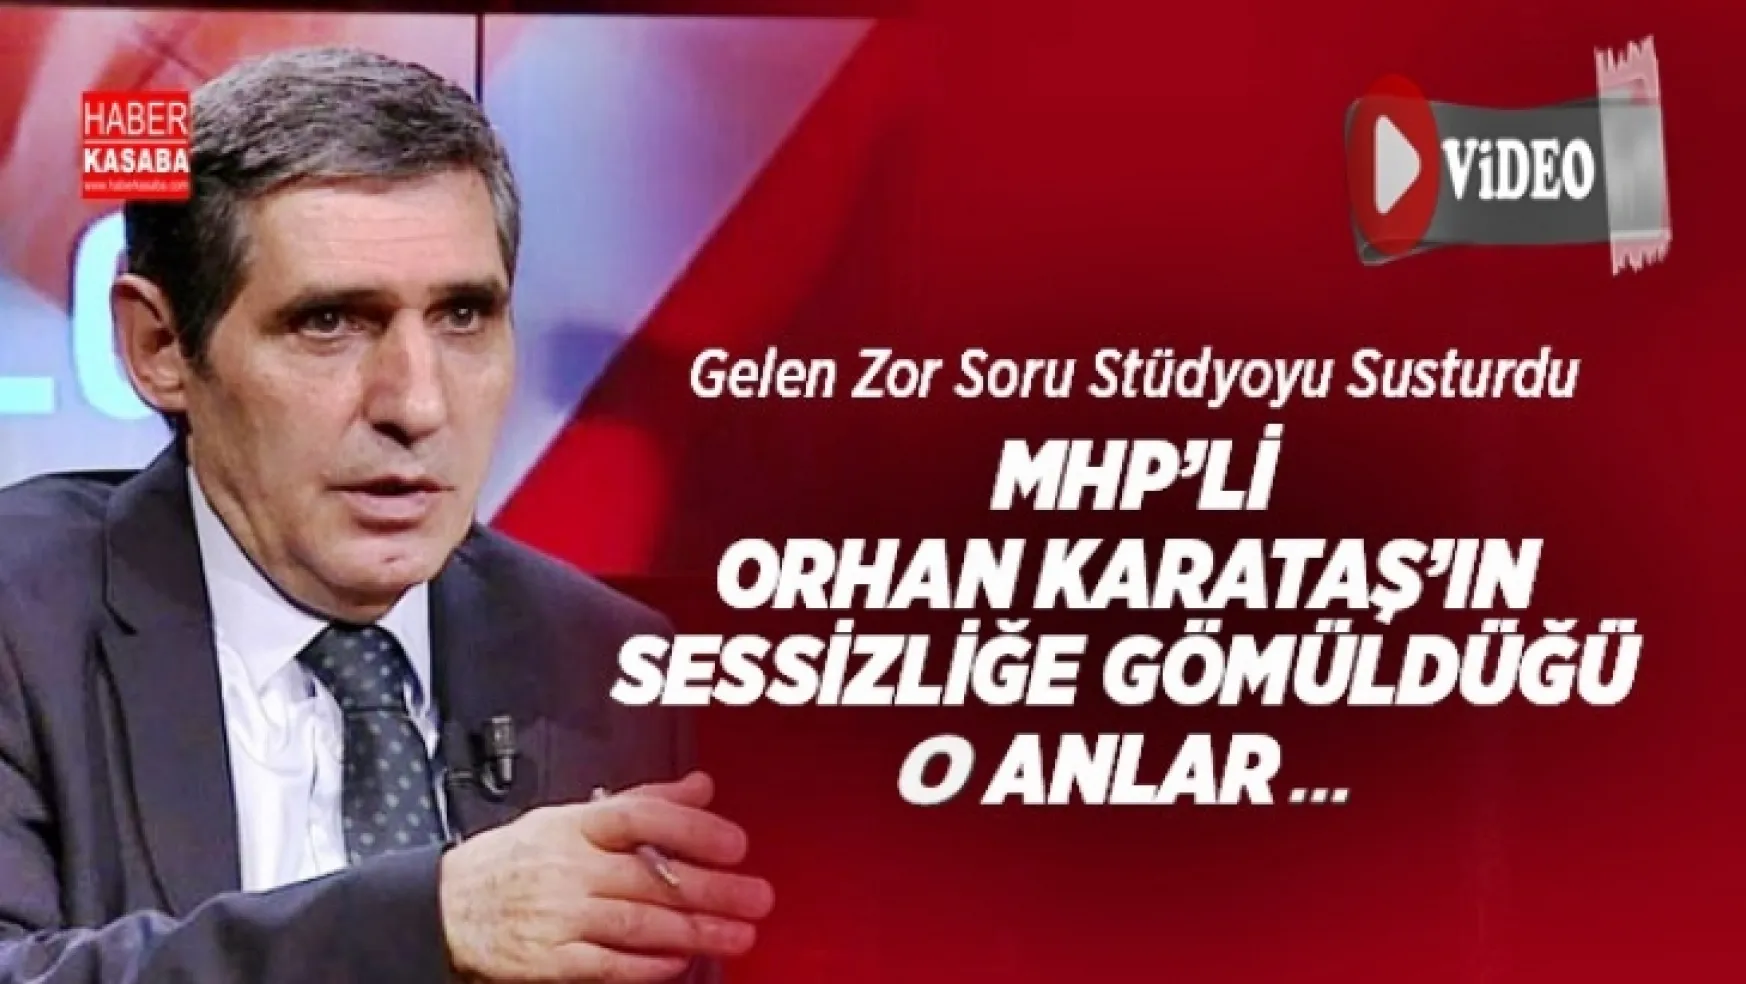 MHP'li Orhan Karataş'ın sessizliğe gömüldüğü o anlar...